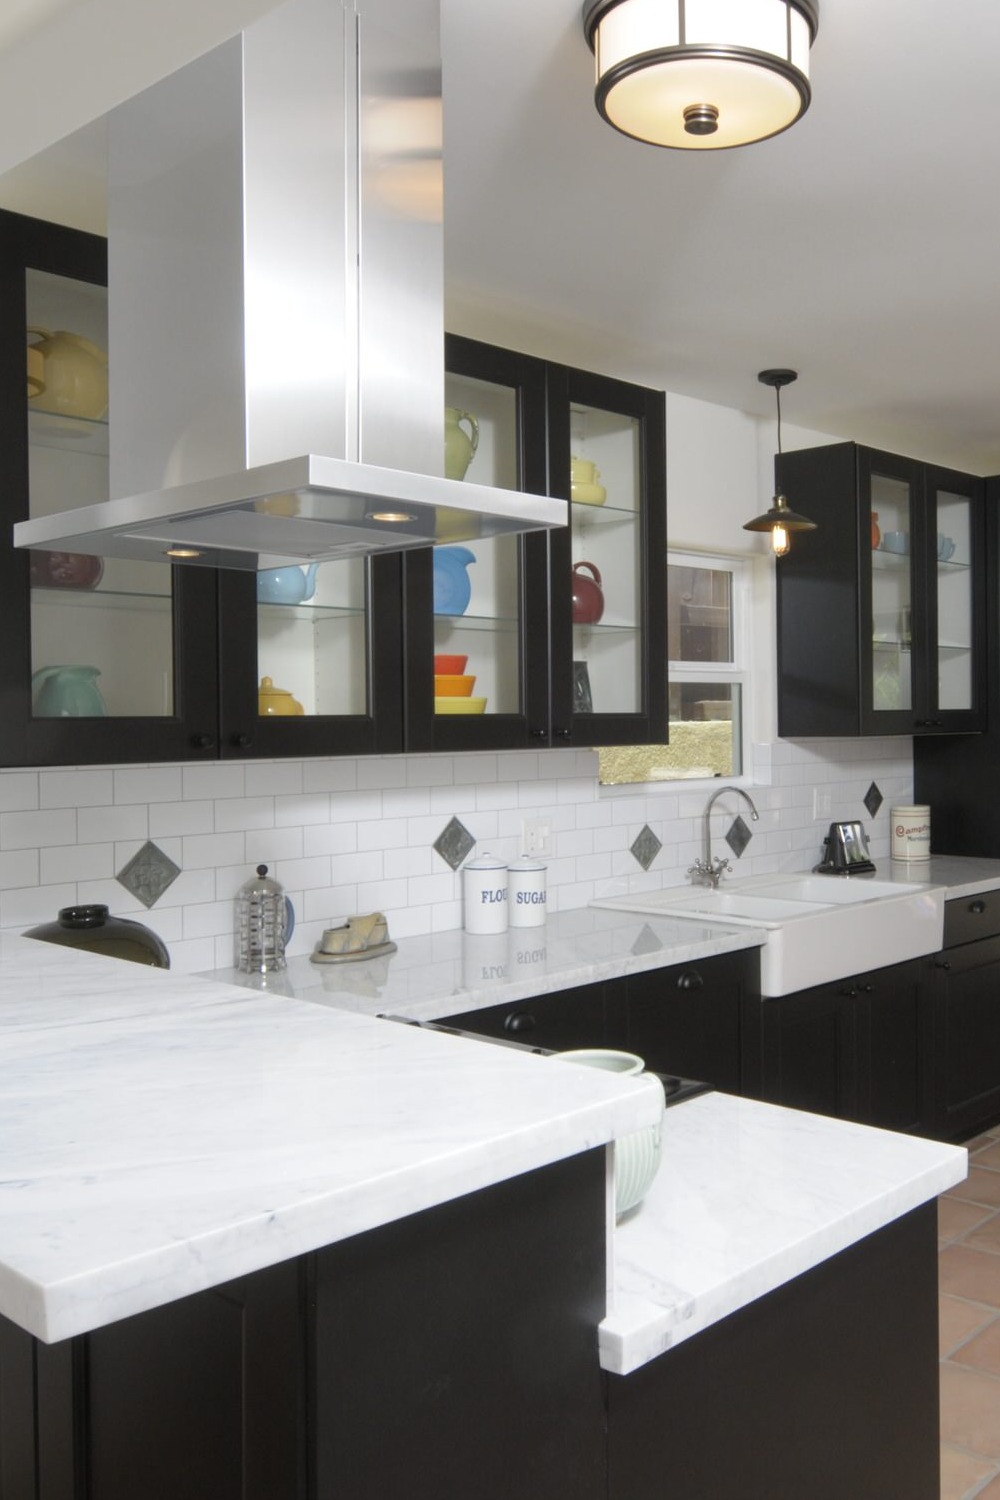 Dark Brown Kitchen Cabinet Ideas Grey Walls Flat Panel Cabinets Space Countertops